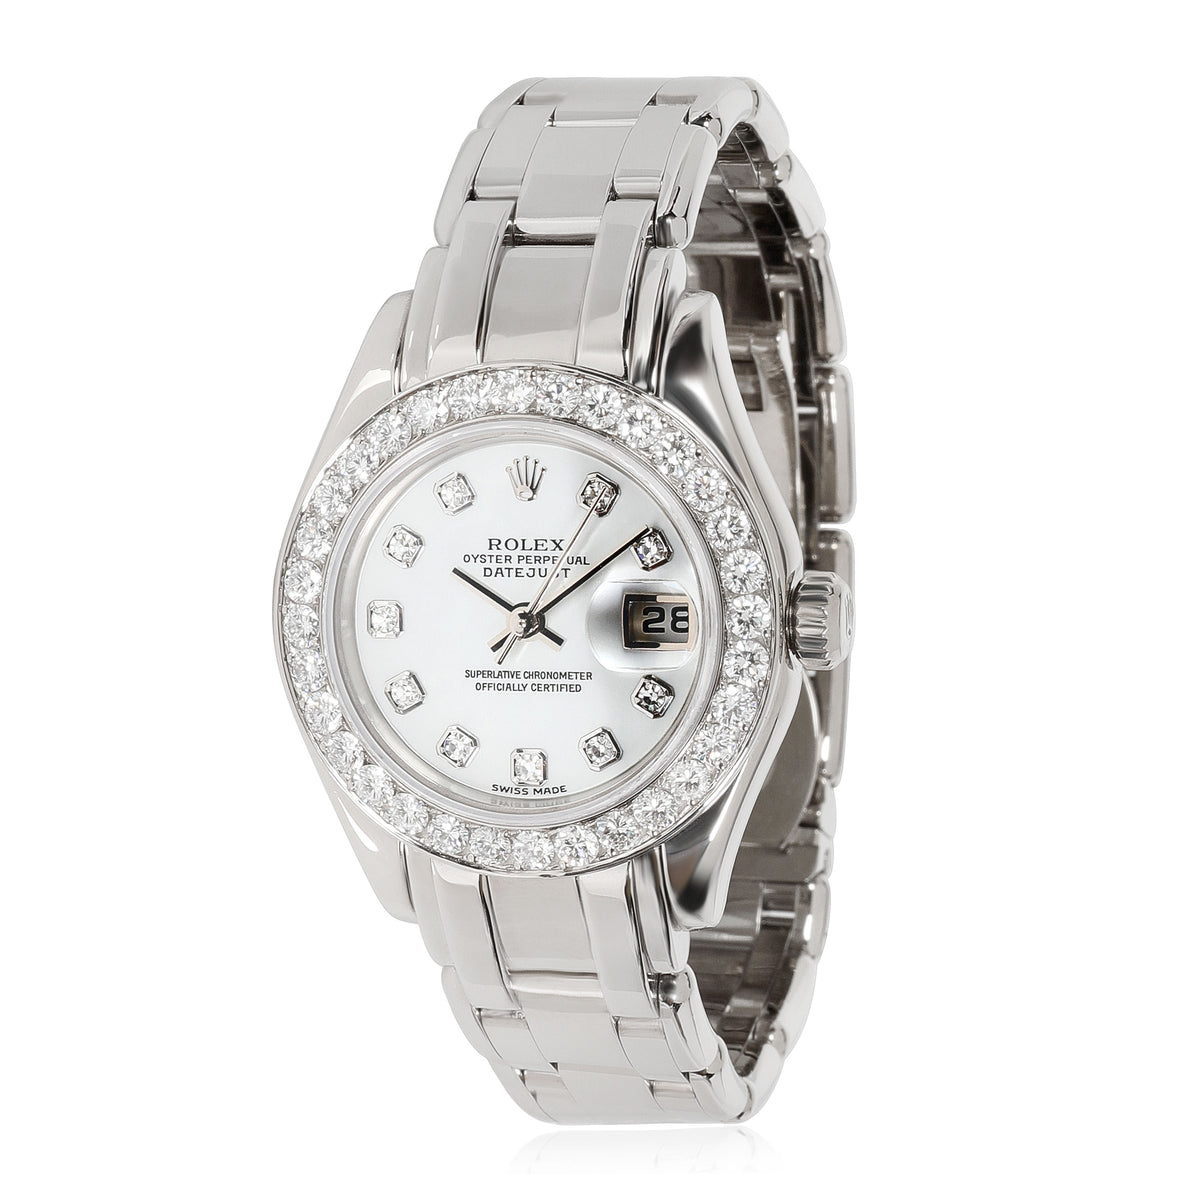 Rolex Pearlmaster 80299 Women's Watch in 18kt White Gold